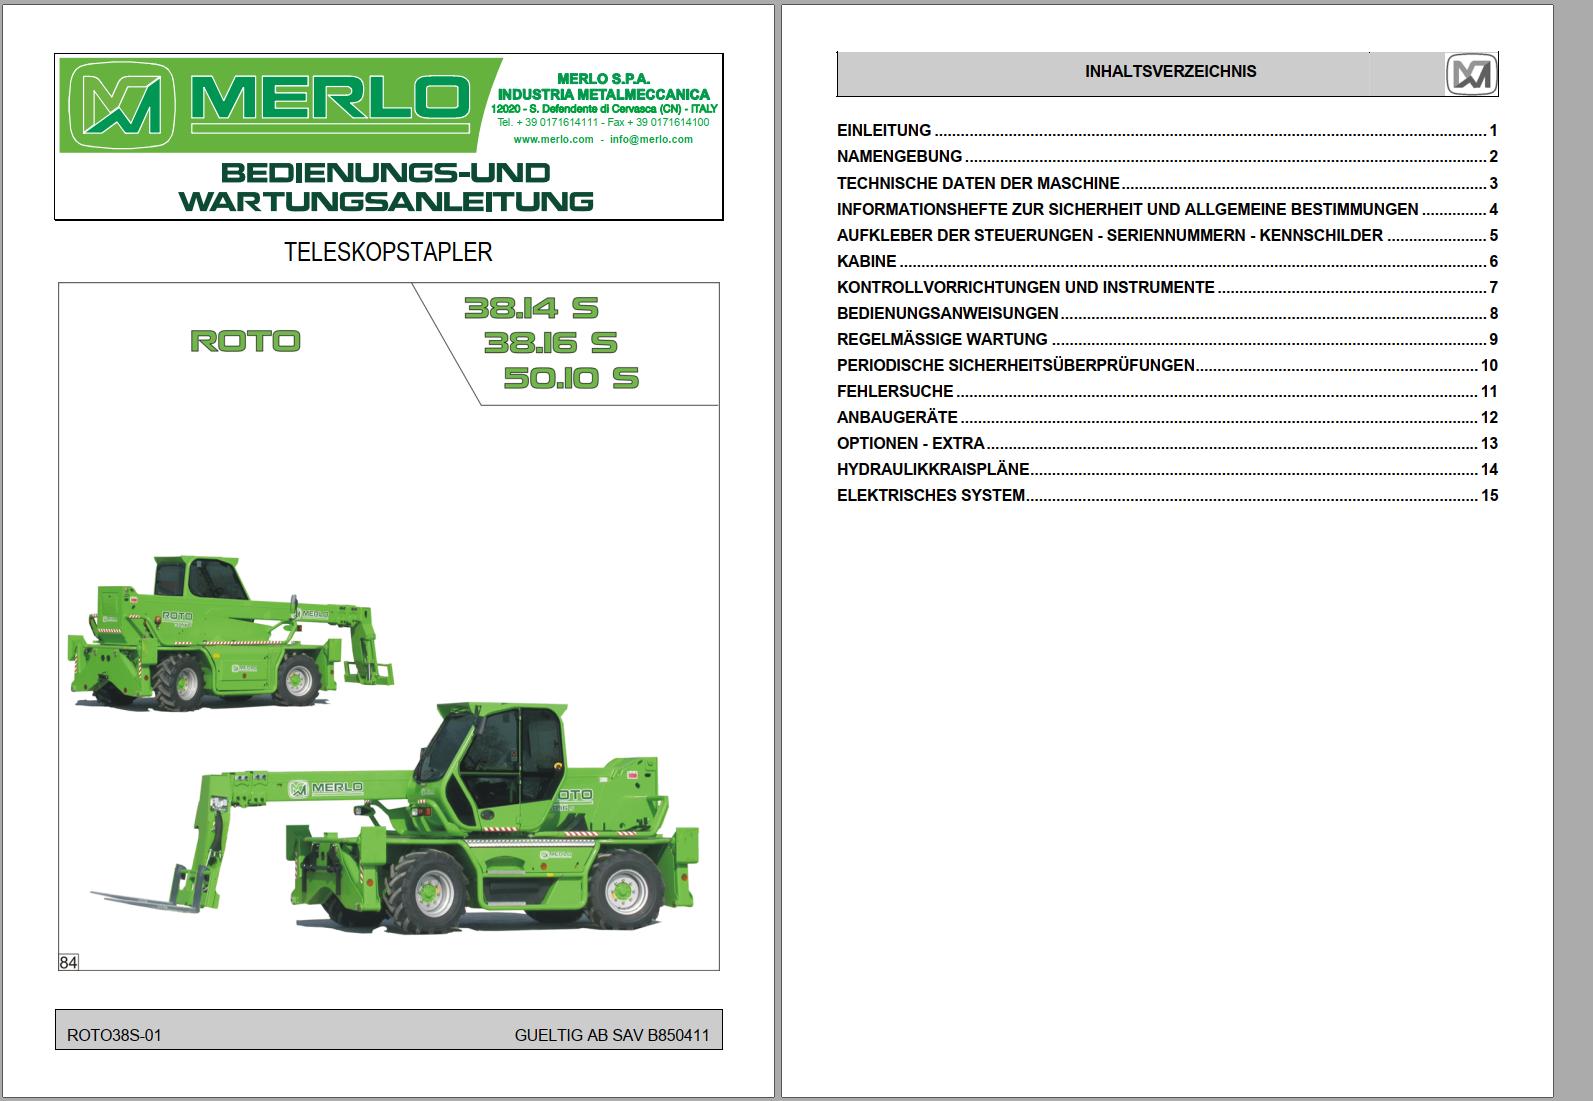 Merlo ROTO IMS 38.14S to 50.10S Service Manuals (- SAV C036141) DE